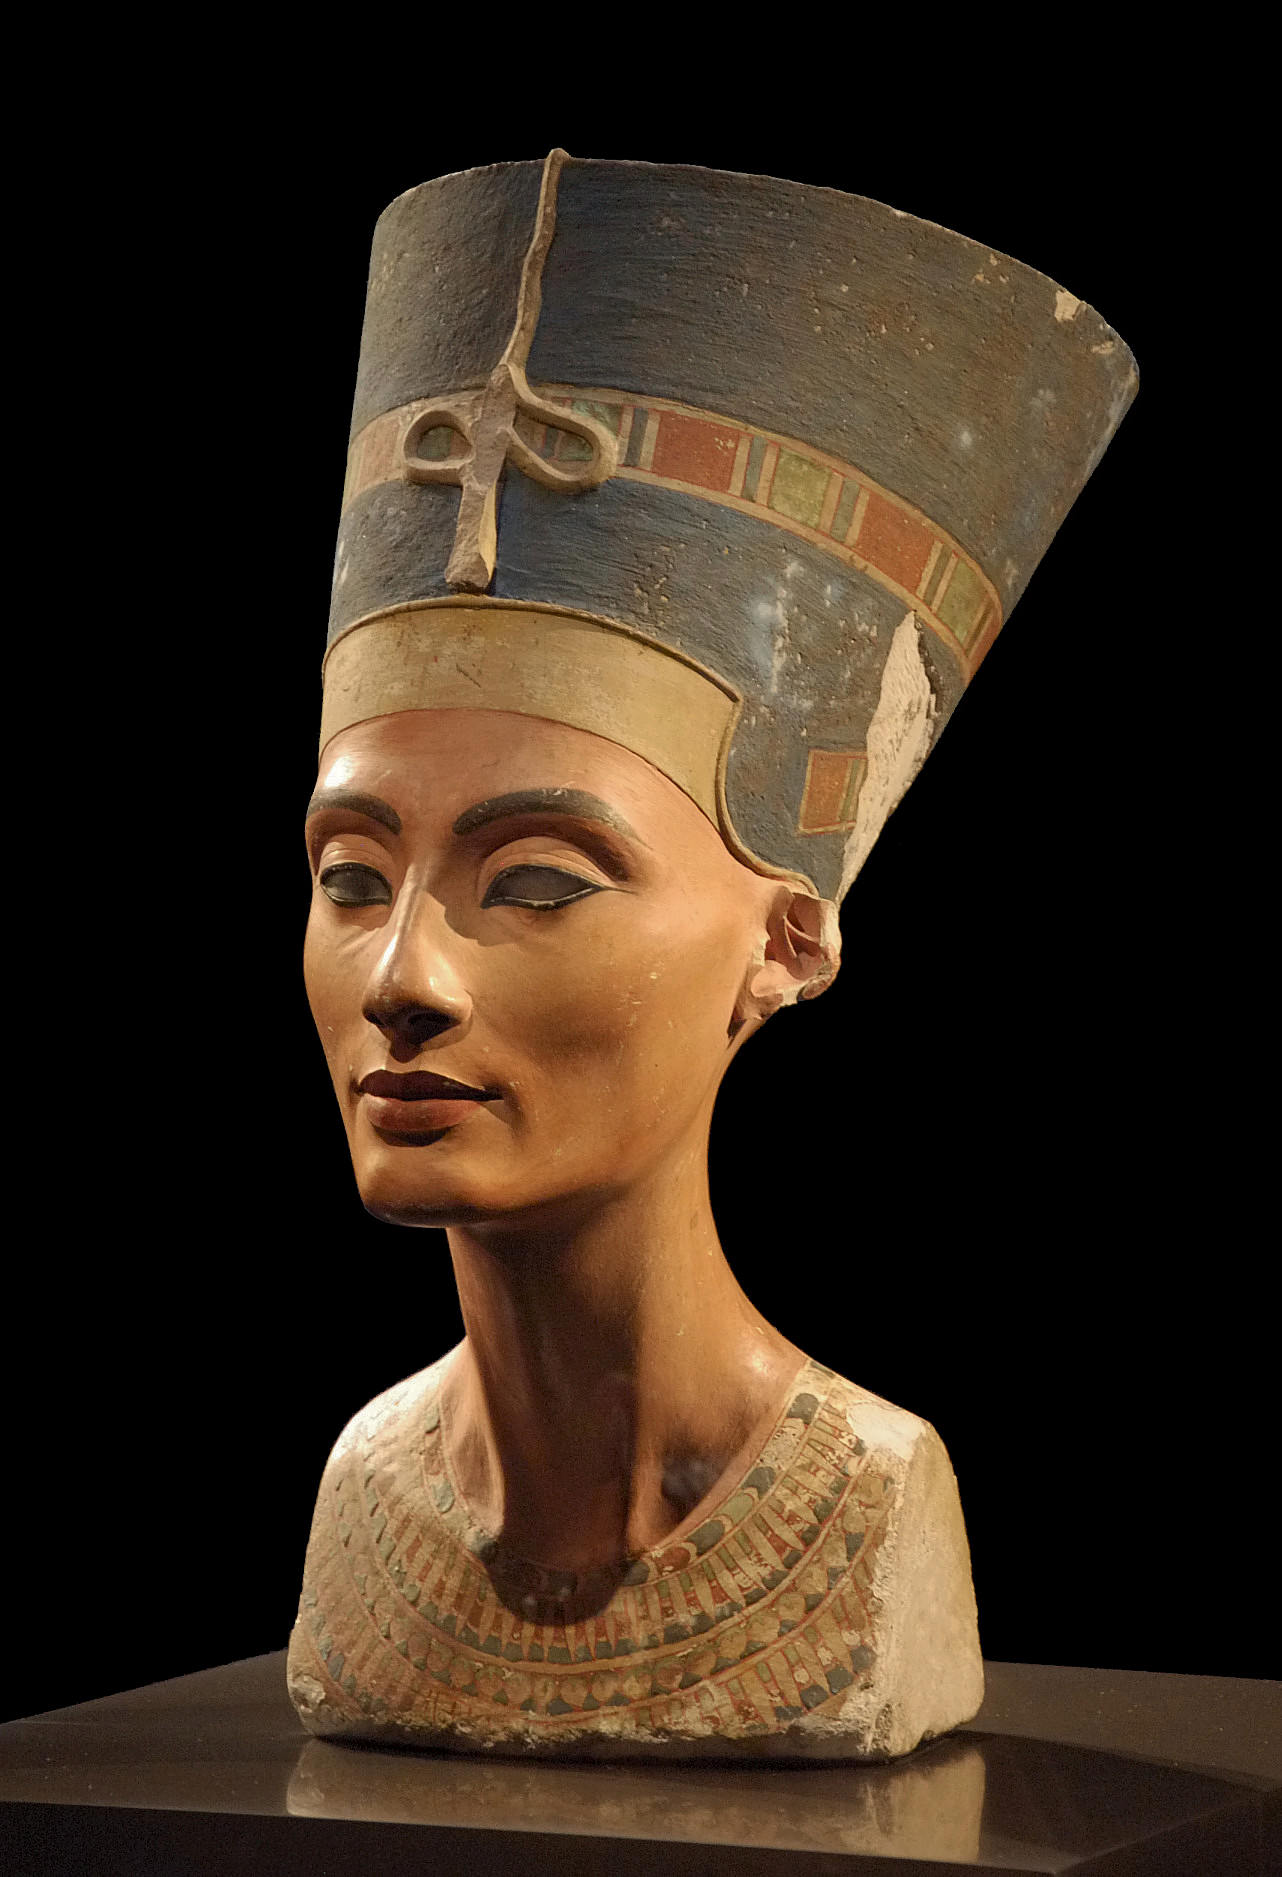 https://www.worldhistory.org/image/2581/queen-nefertiti/download/